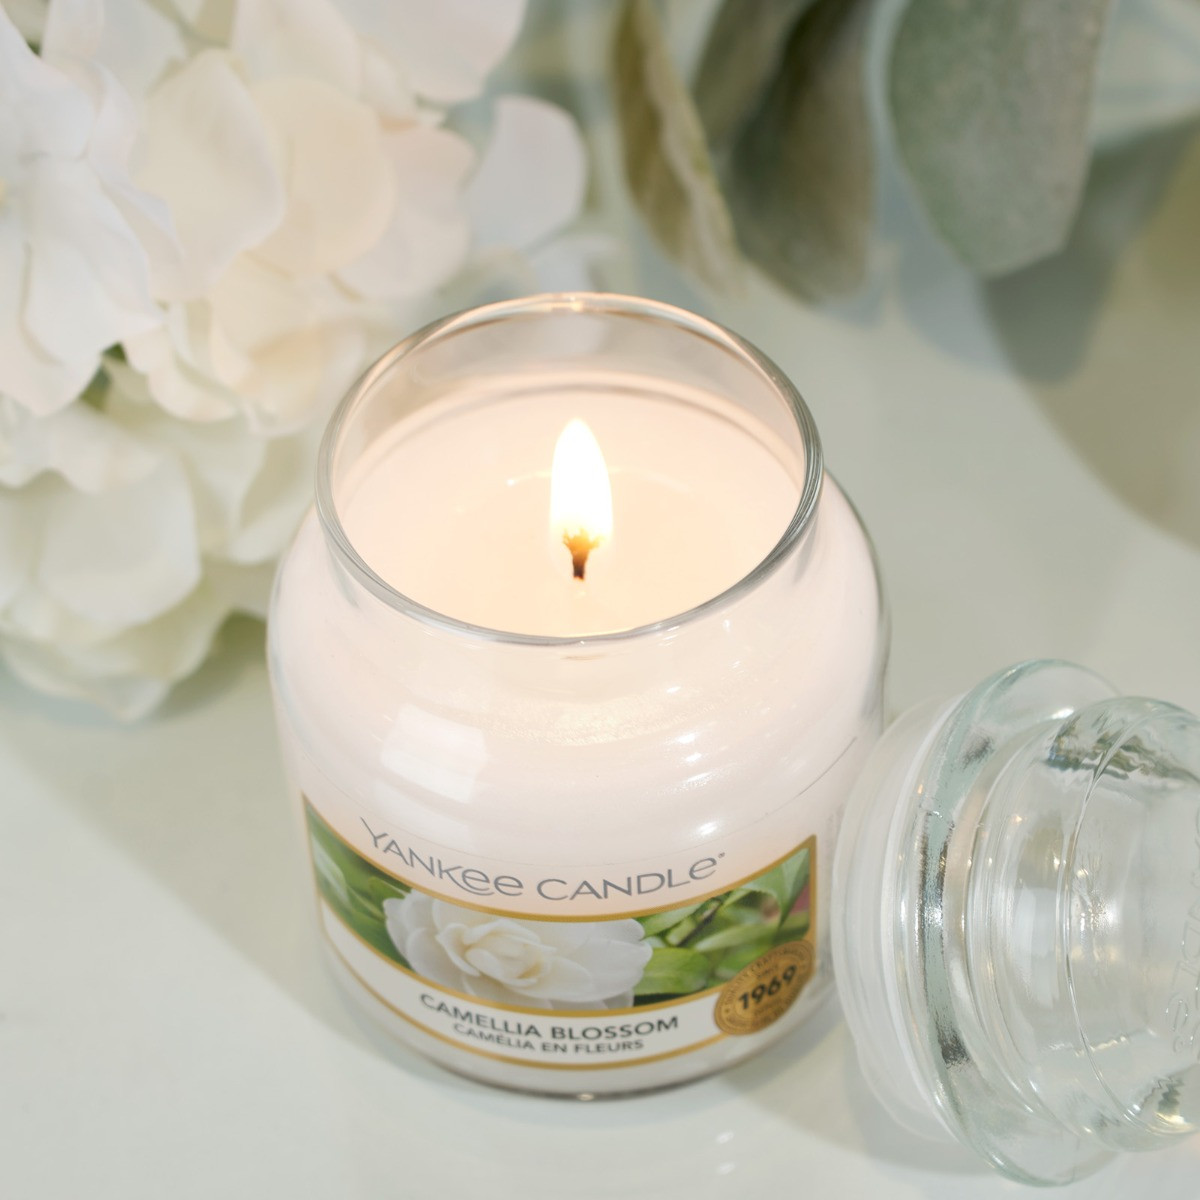 Yankee Candle Small Jar - Camellia Blossom>